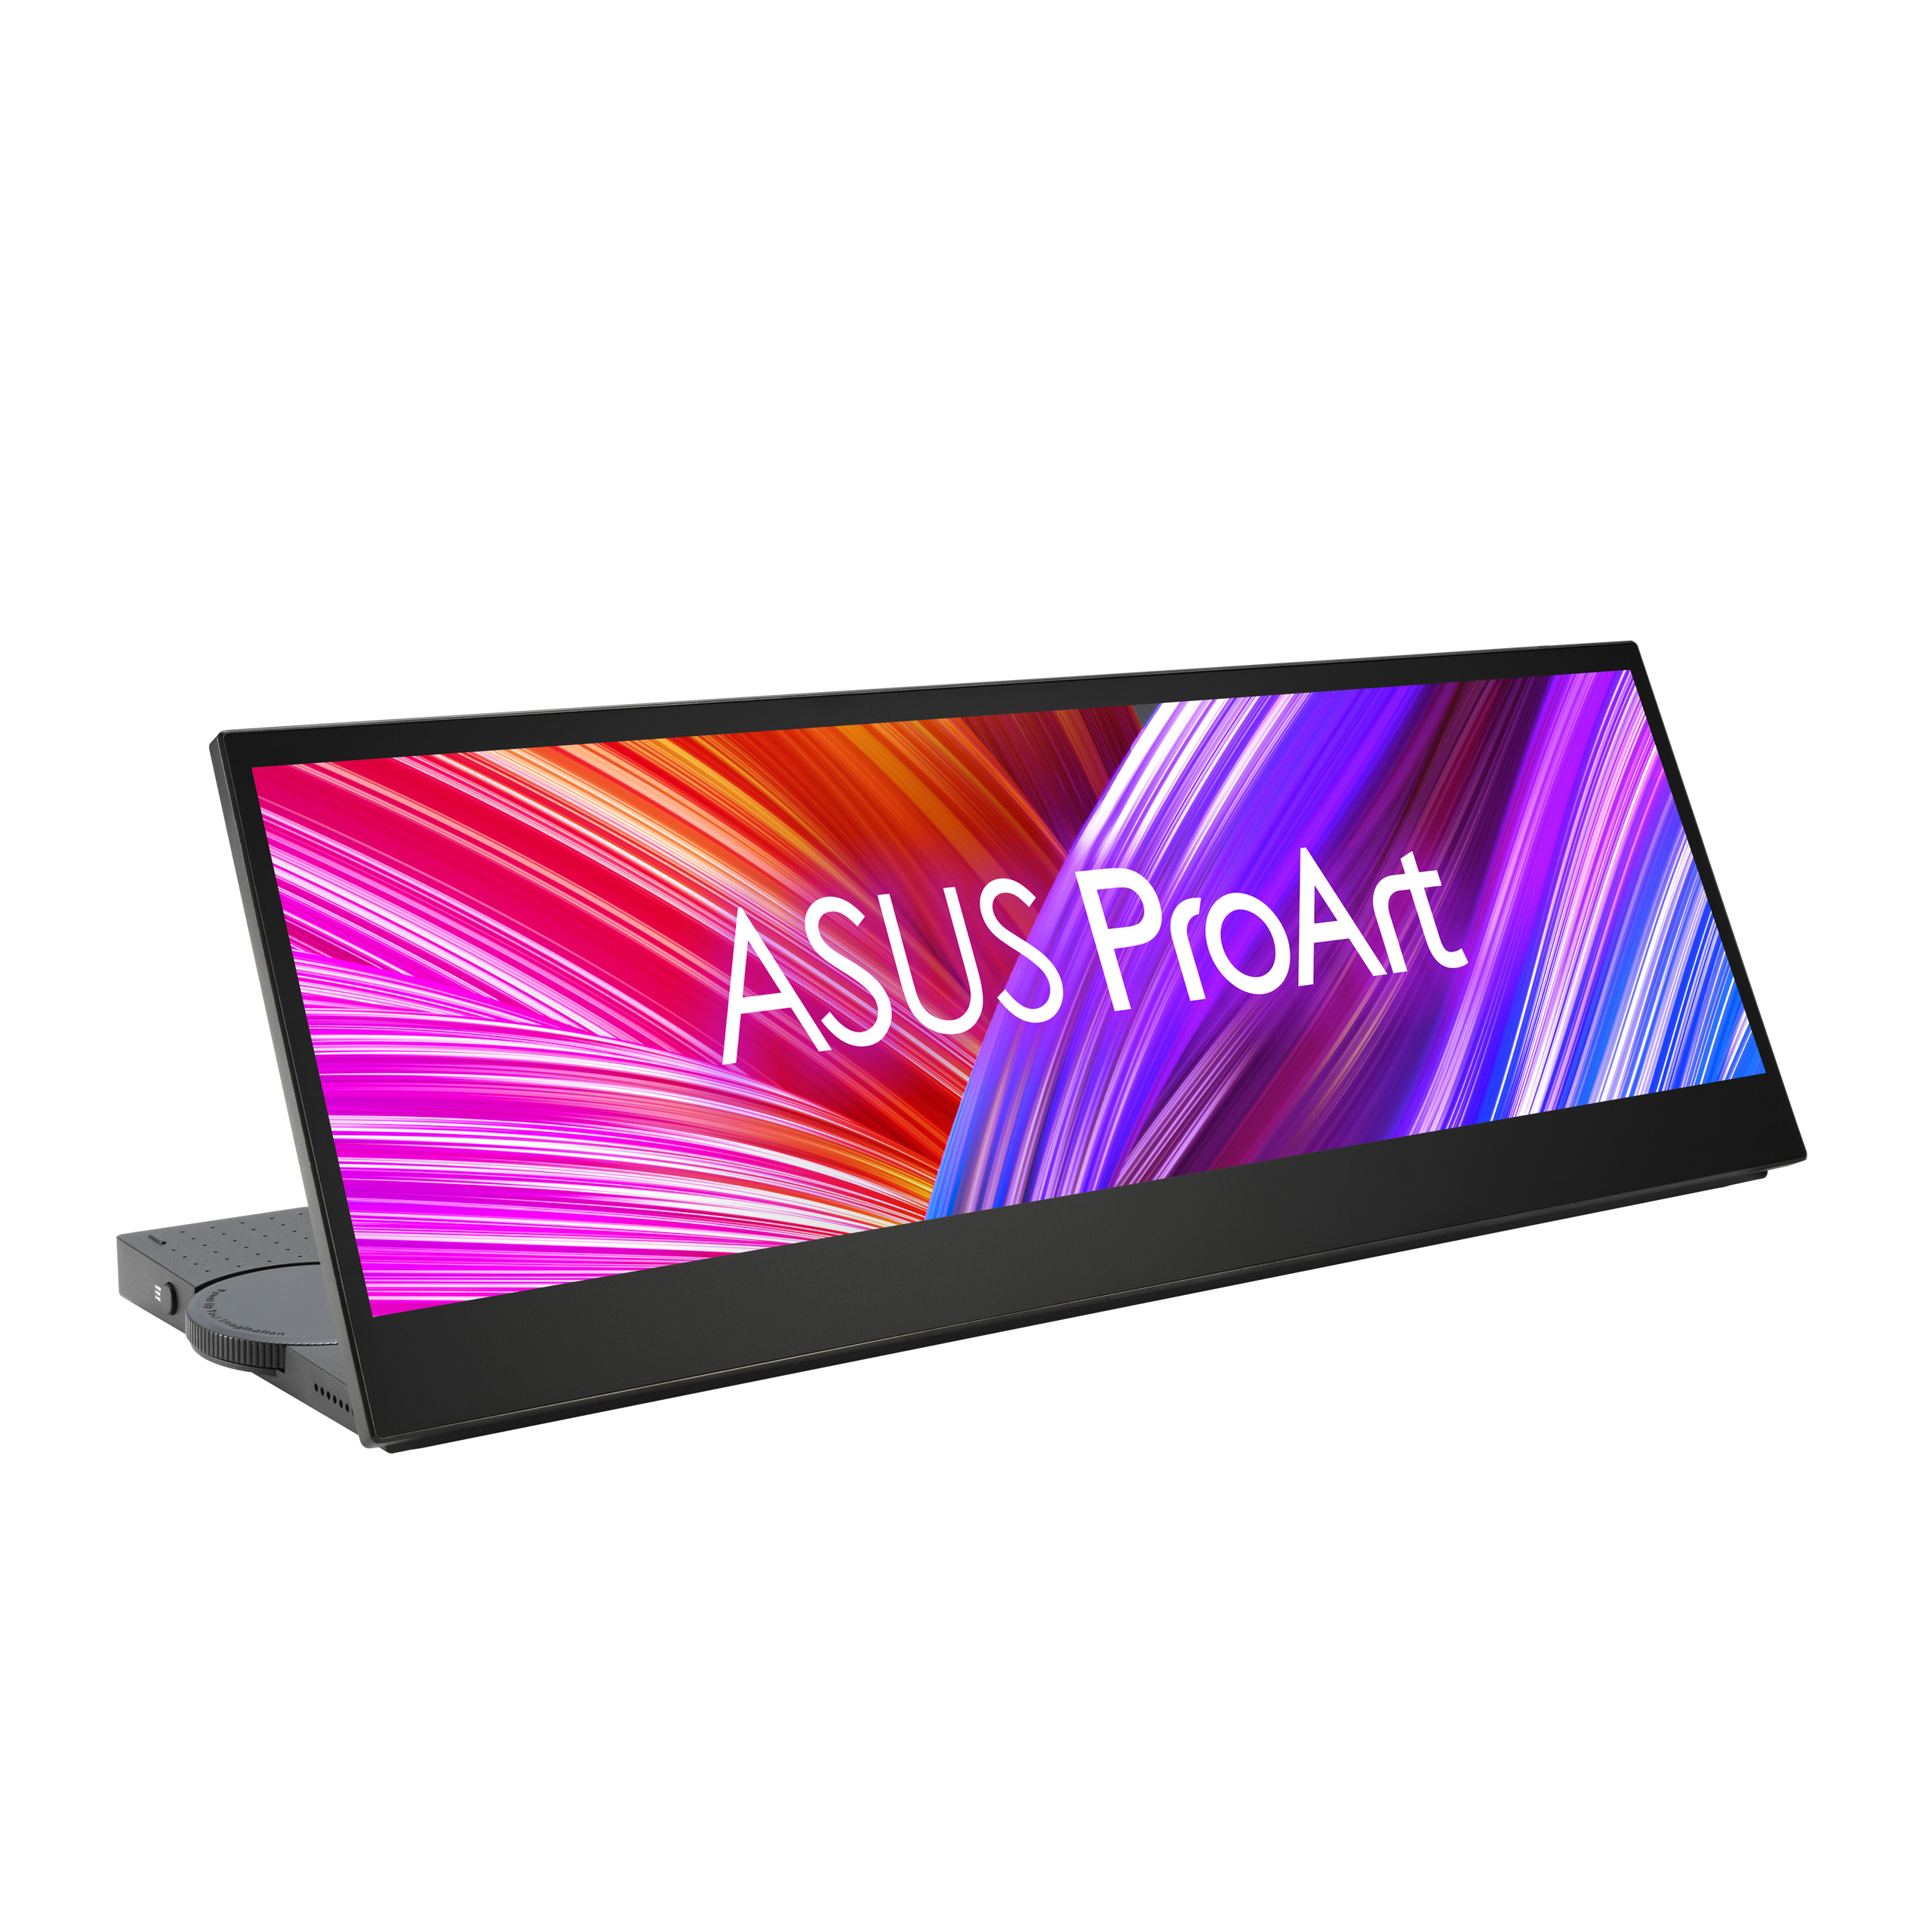 ASUS mở rộng dòng ProArt với màn hình ProArt, màn hình OLED ProArt, bo mạch chủ ProArt X570-Creator WiFi và máy chiếu ProArt Projector A1 mới